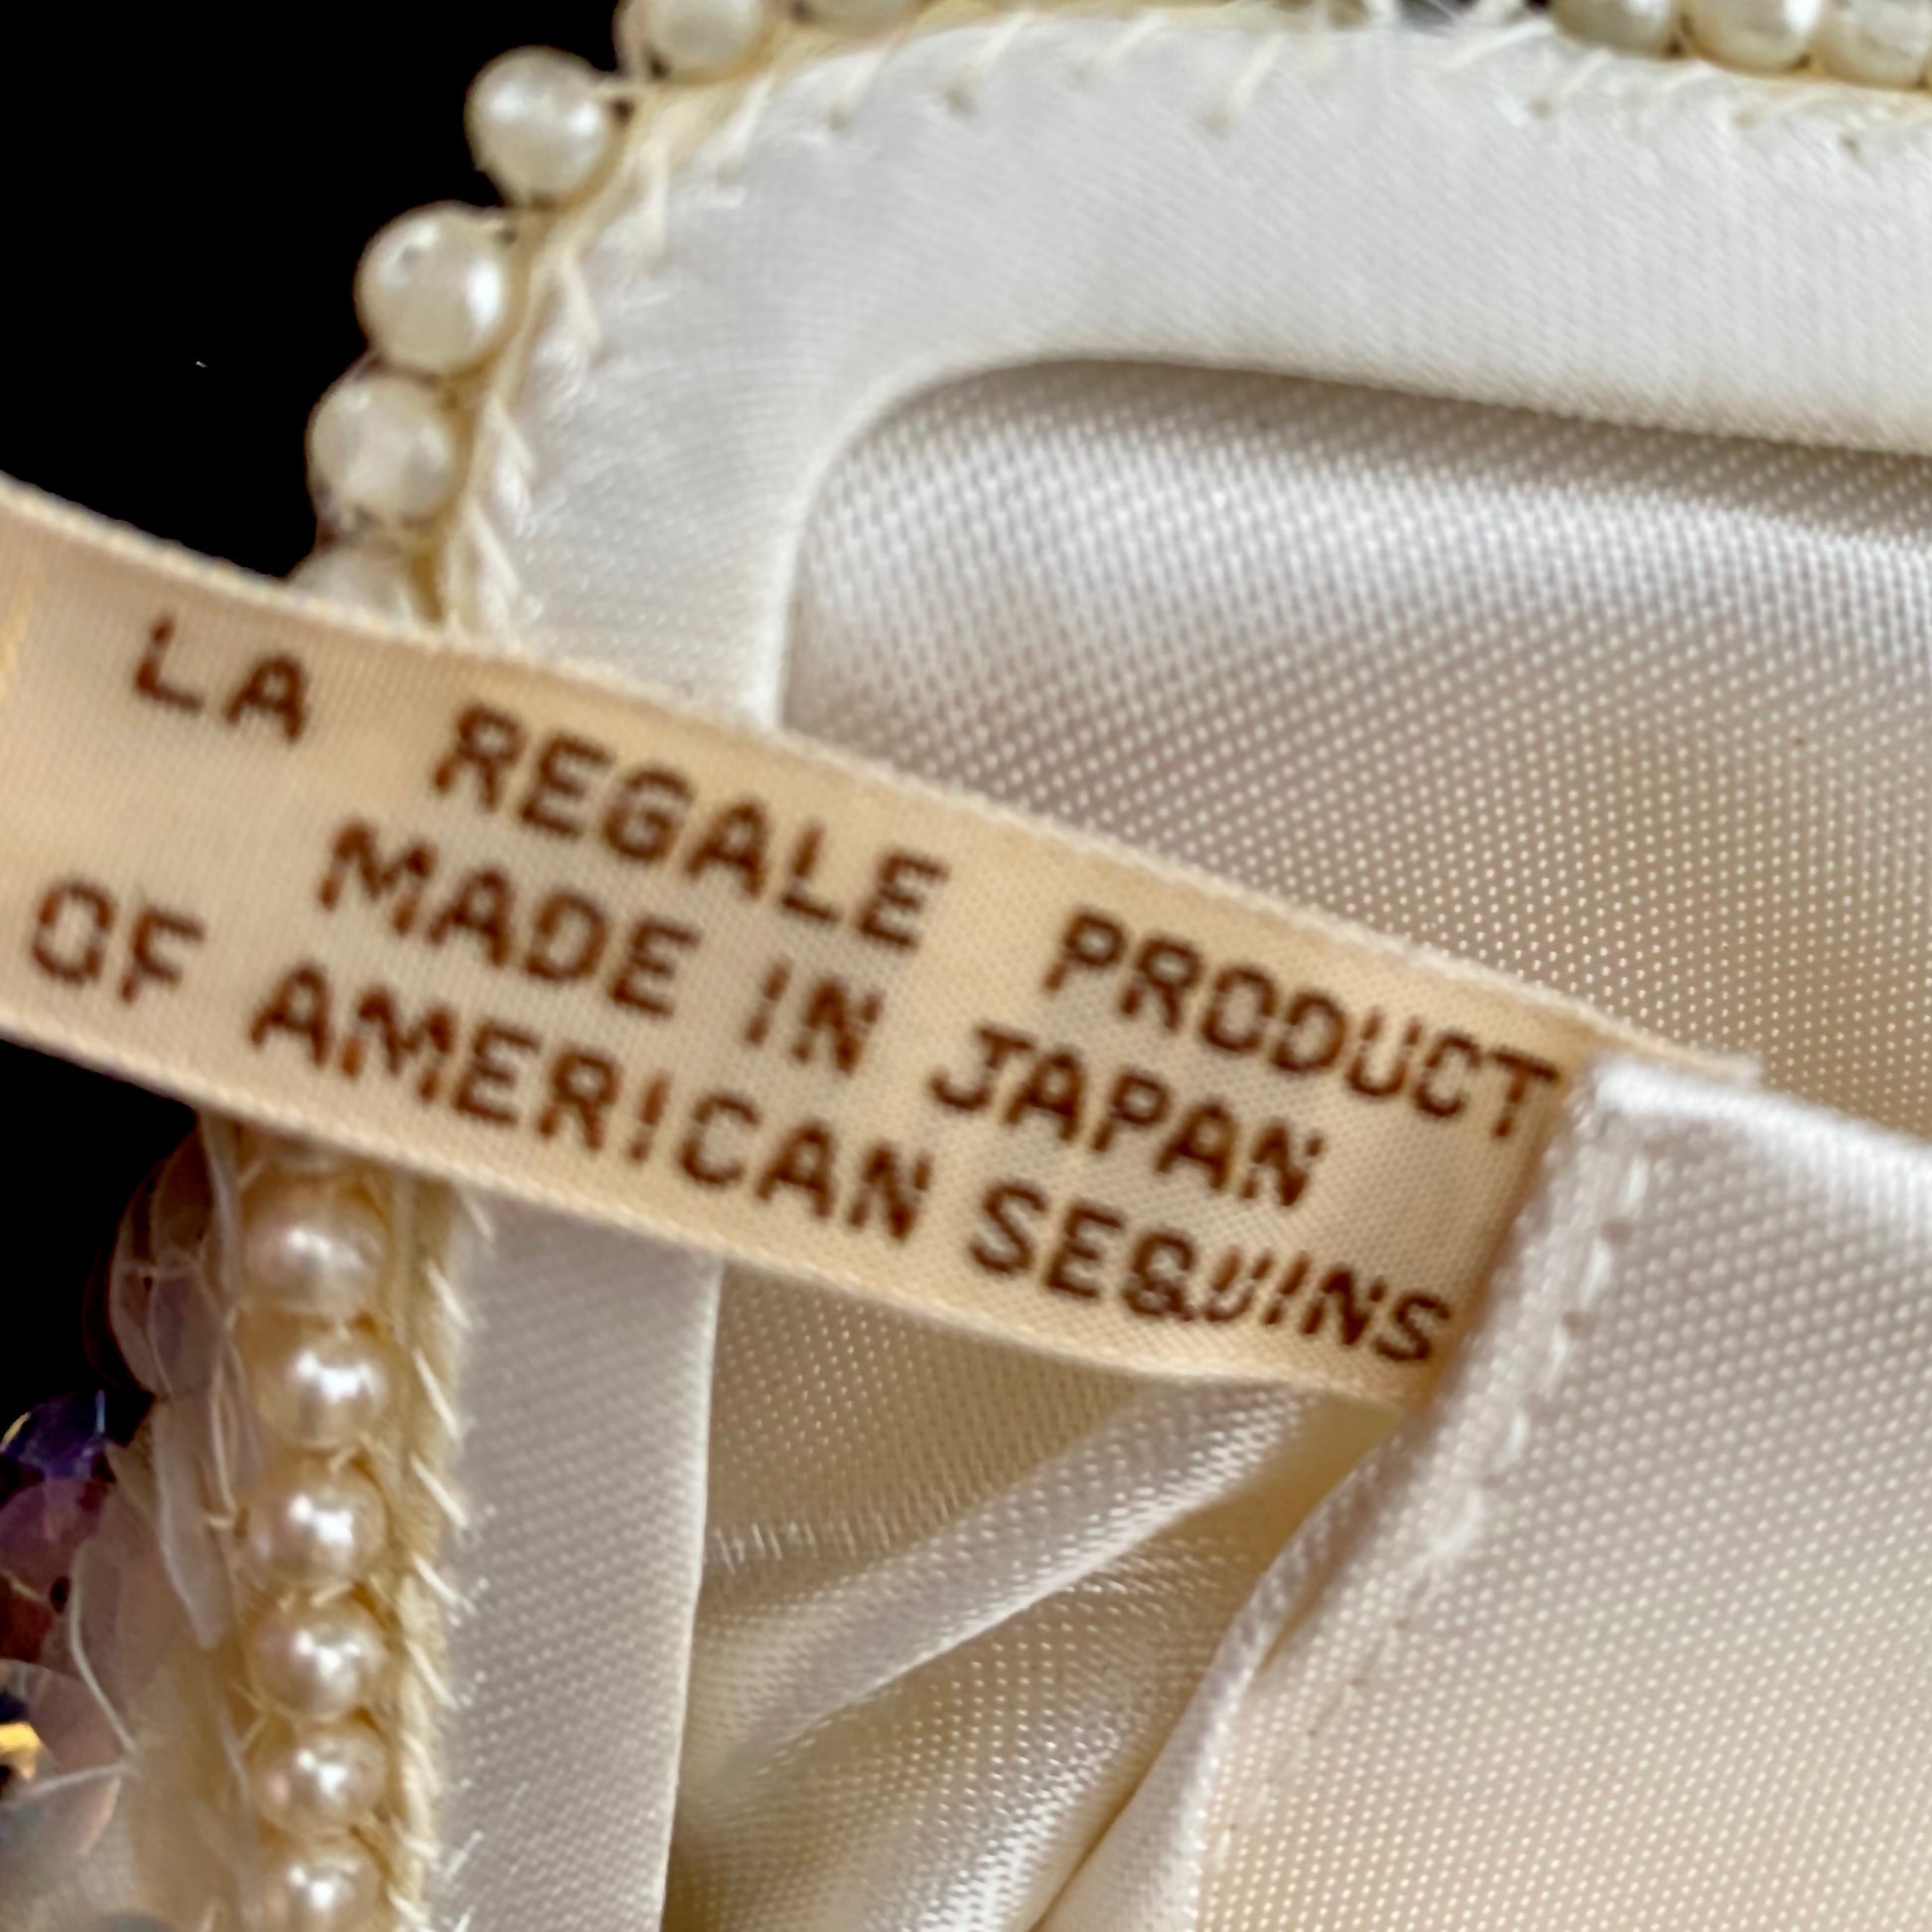 La Regale Sequin and Beaded Bag